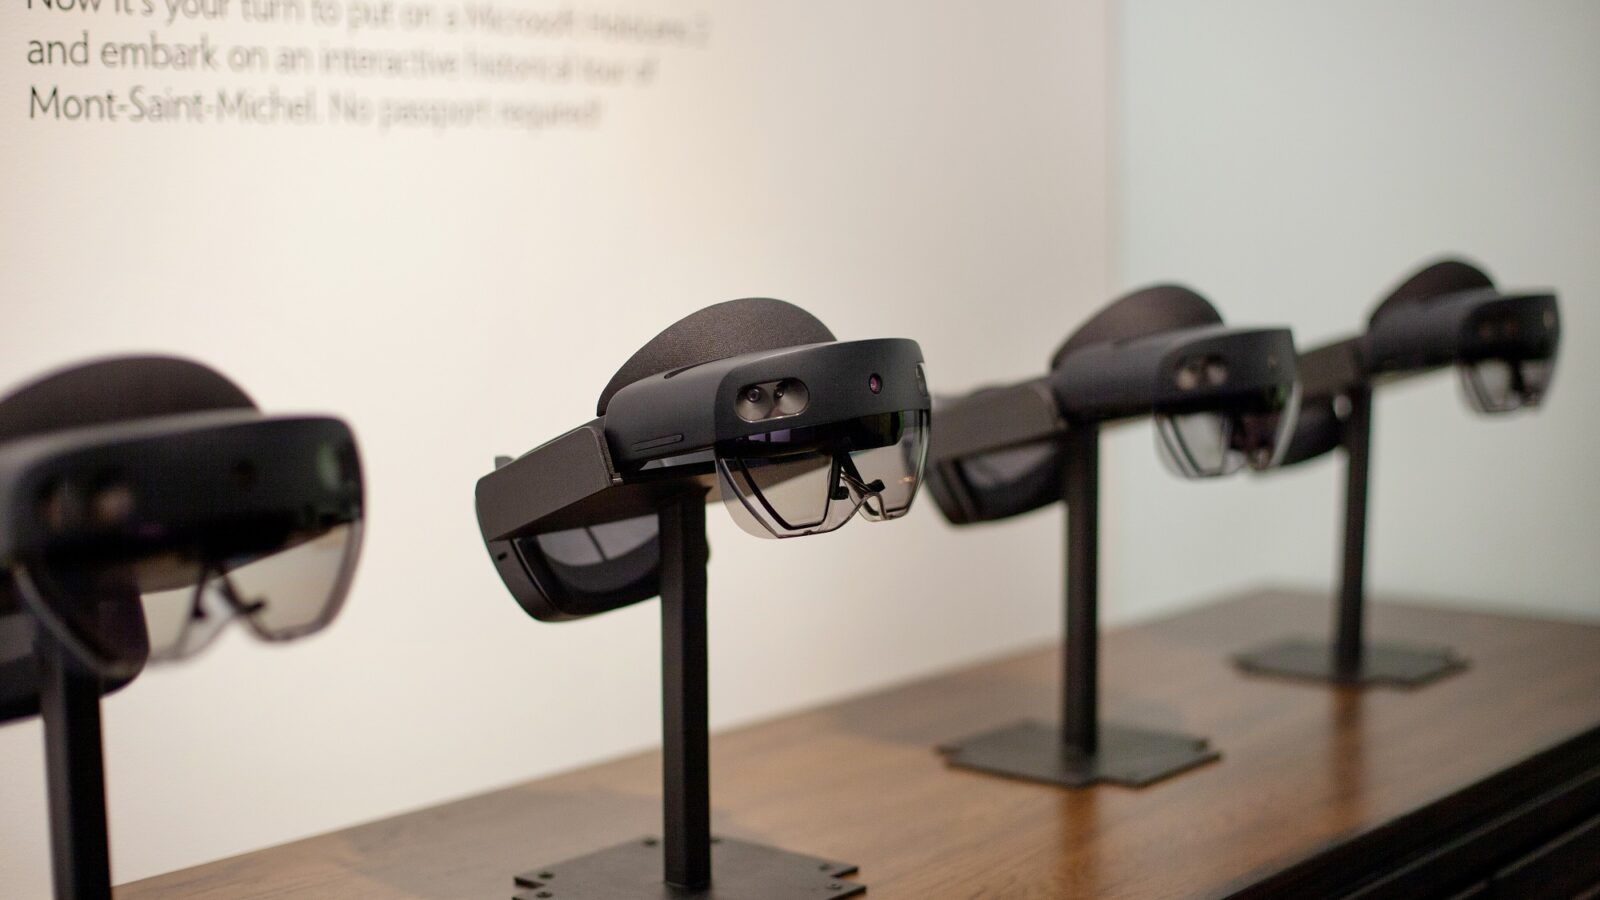 HoloLens 2 on display